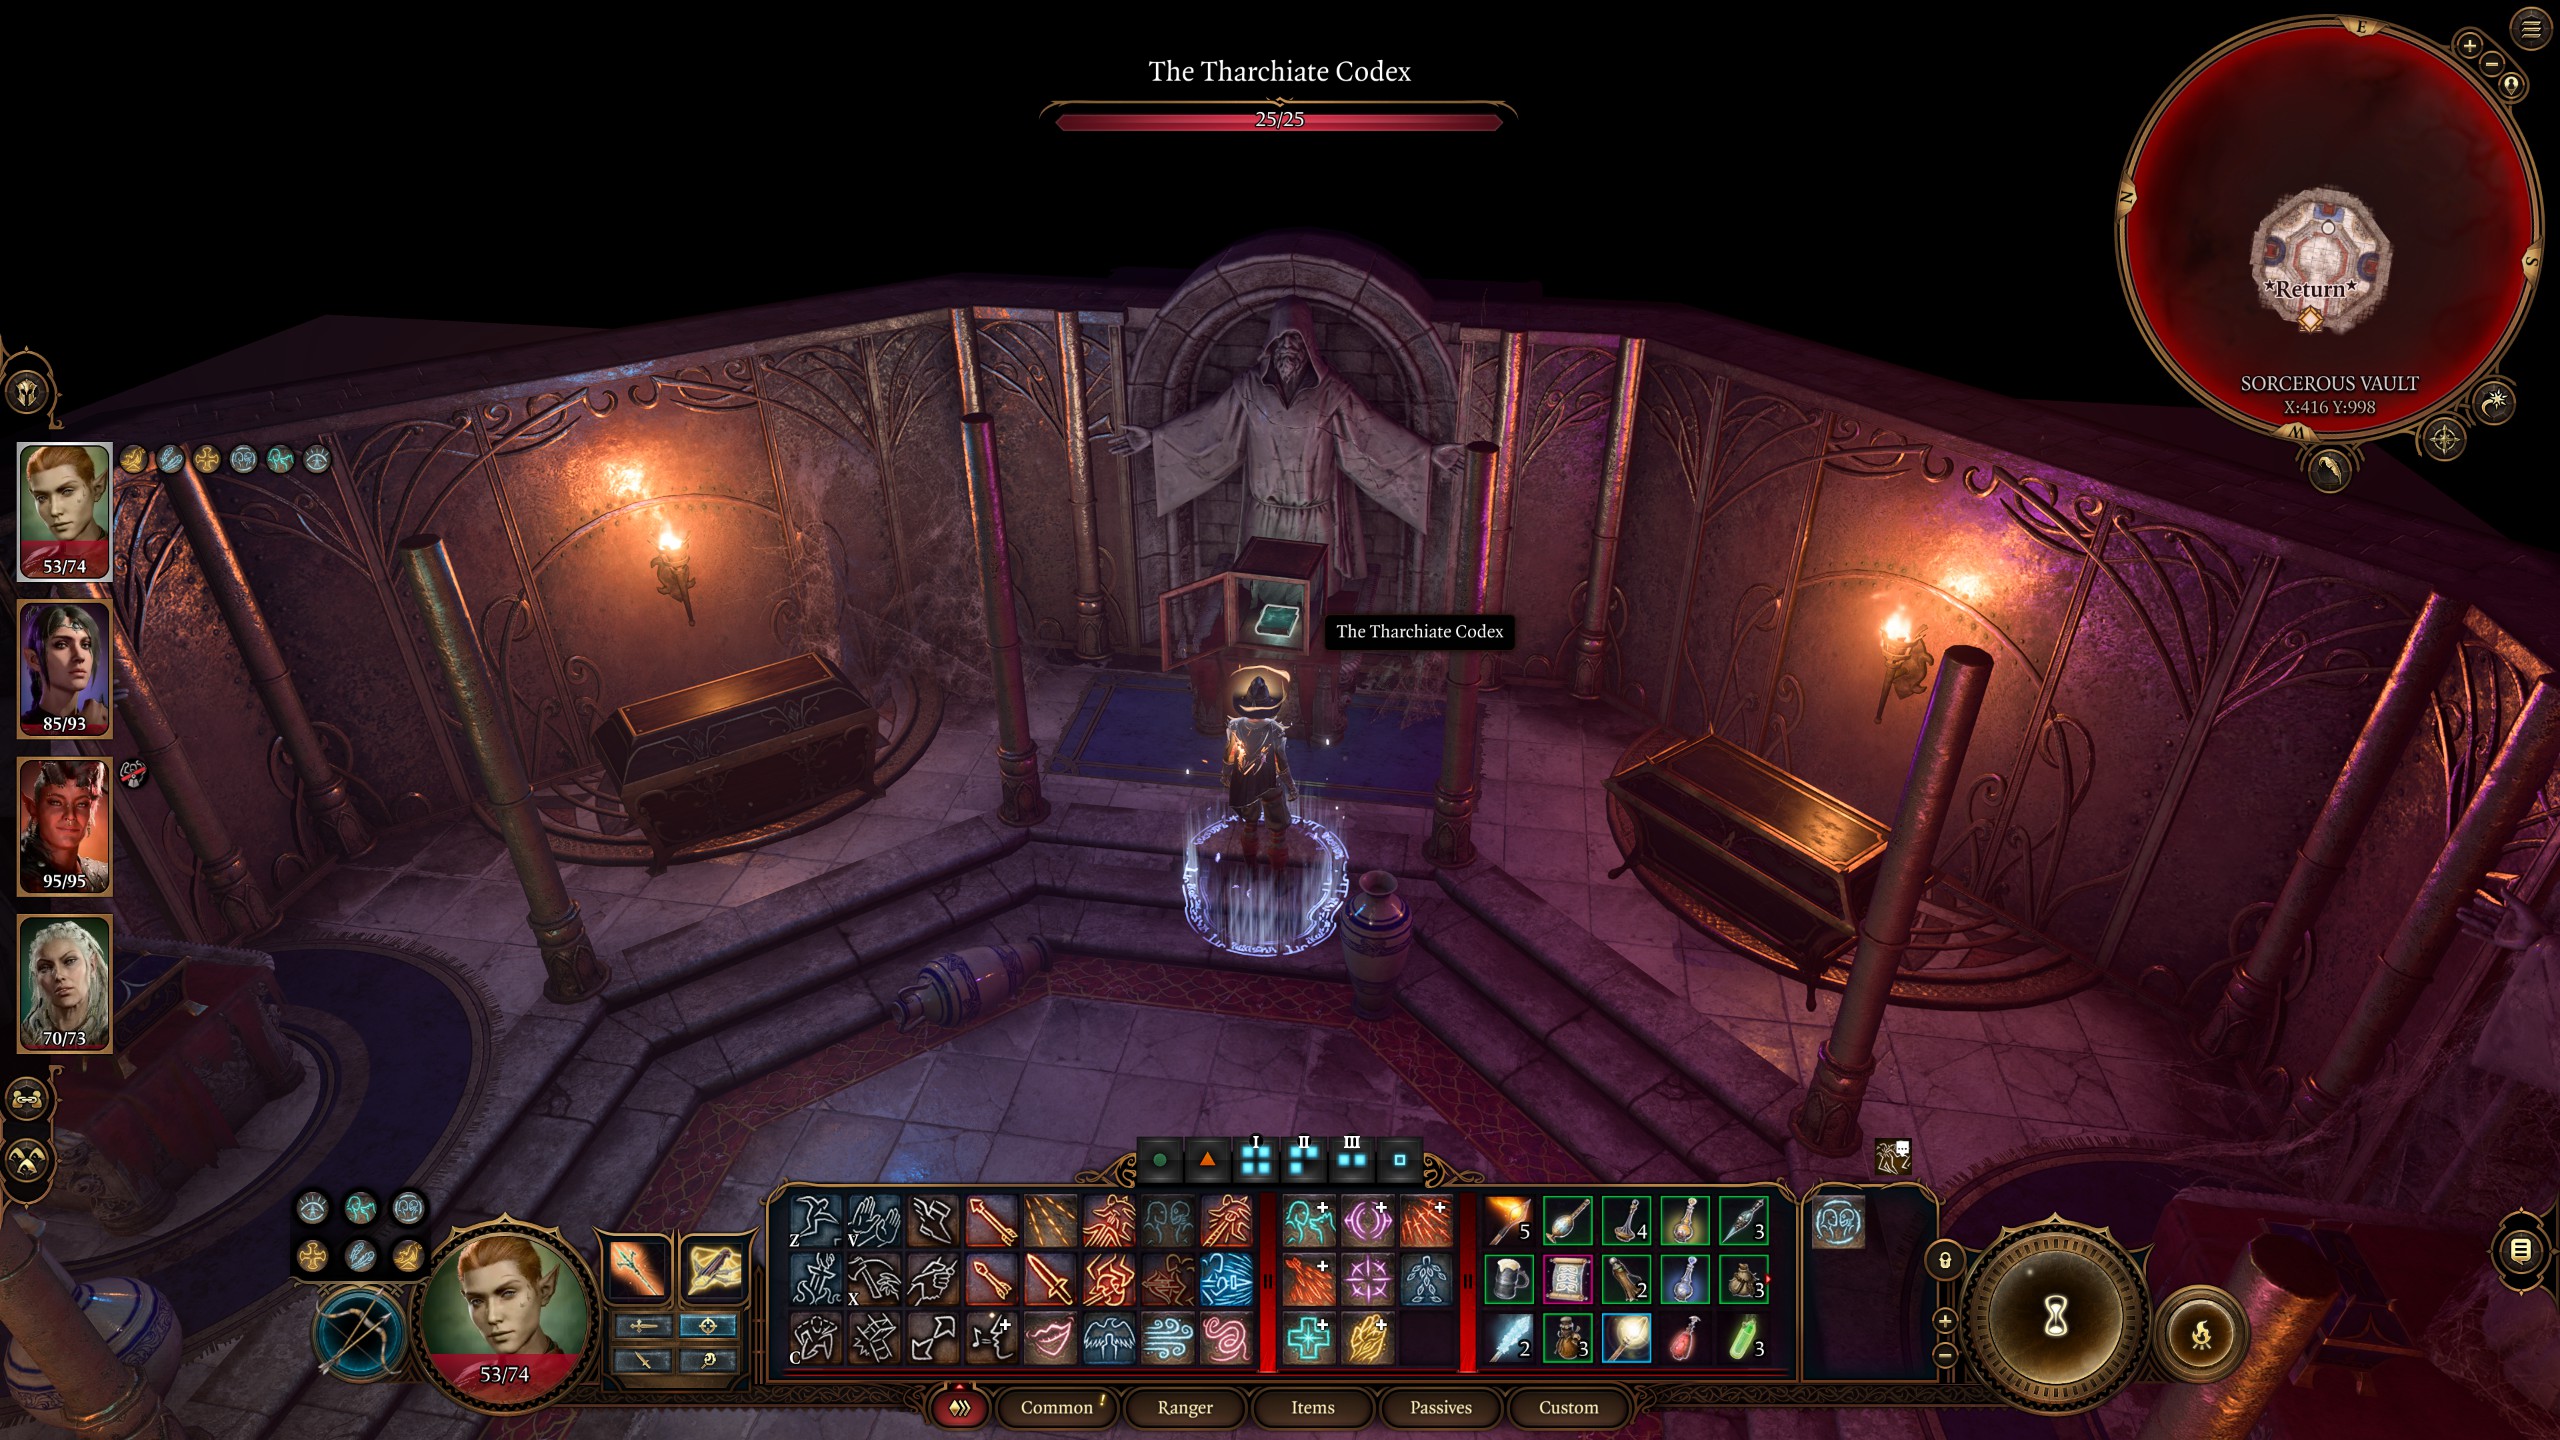 Baldur's Gate 3 Sorcerous Vault - Tharciate Codex